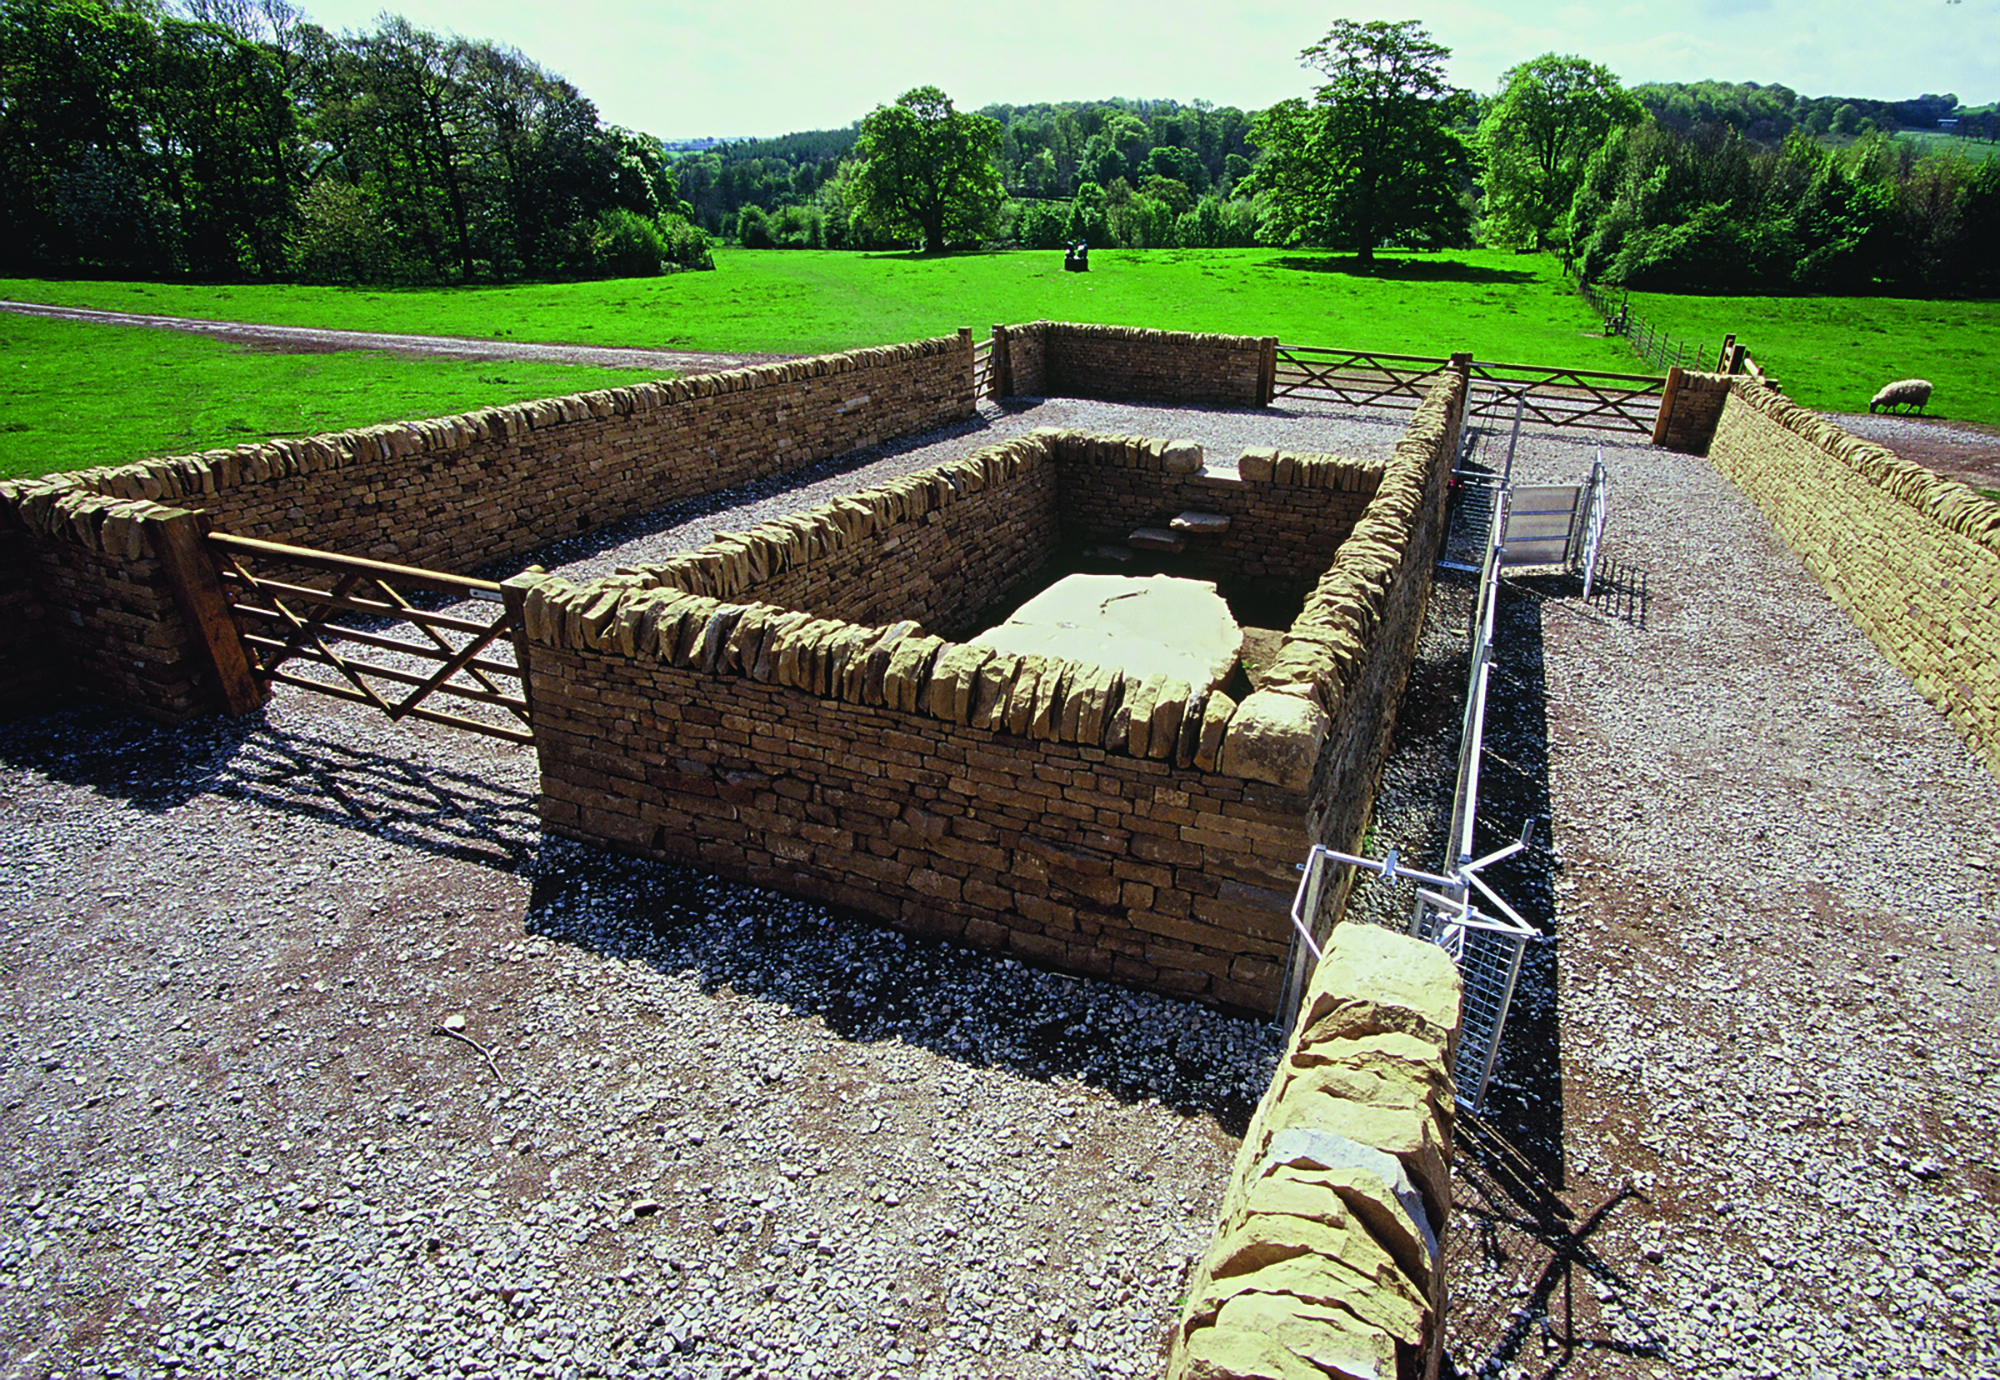 A dry stone wall sheep fold enclosure